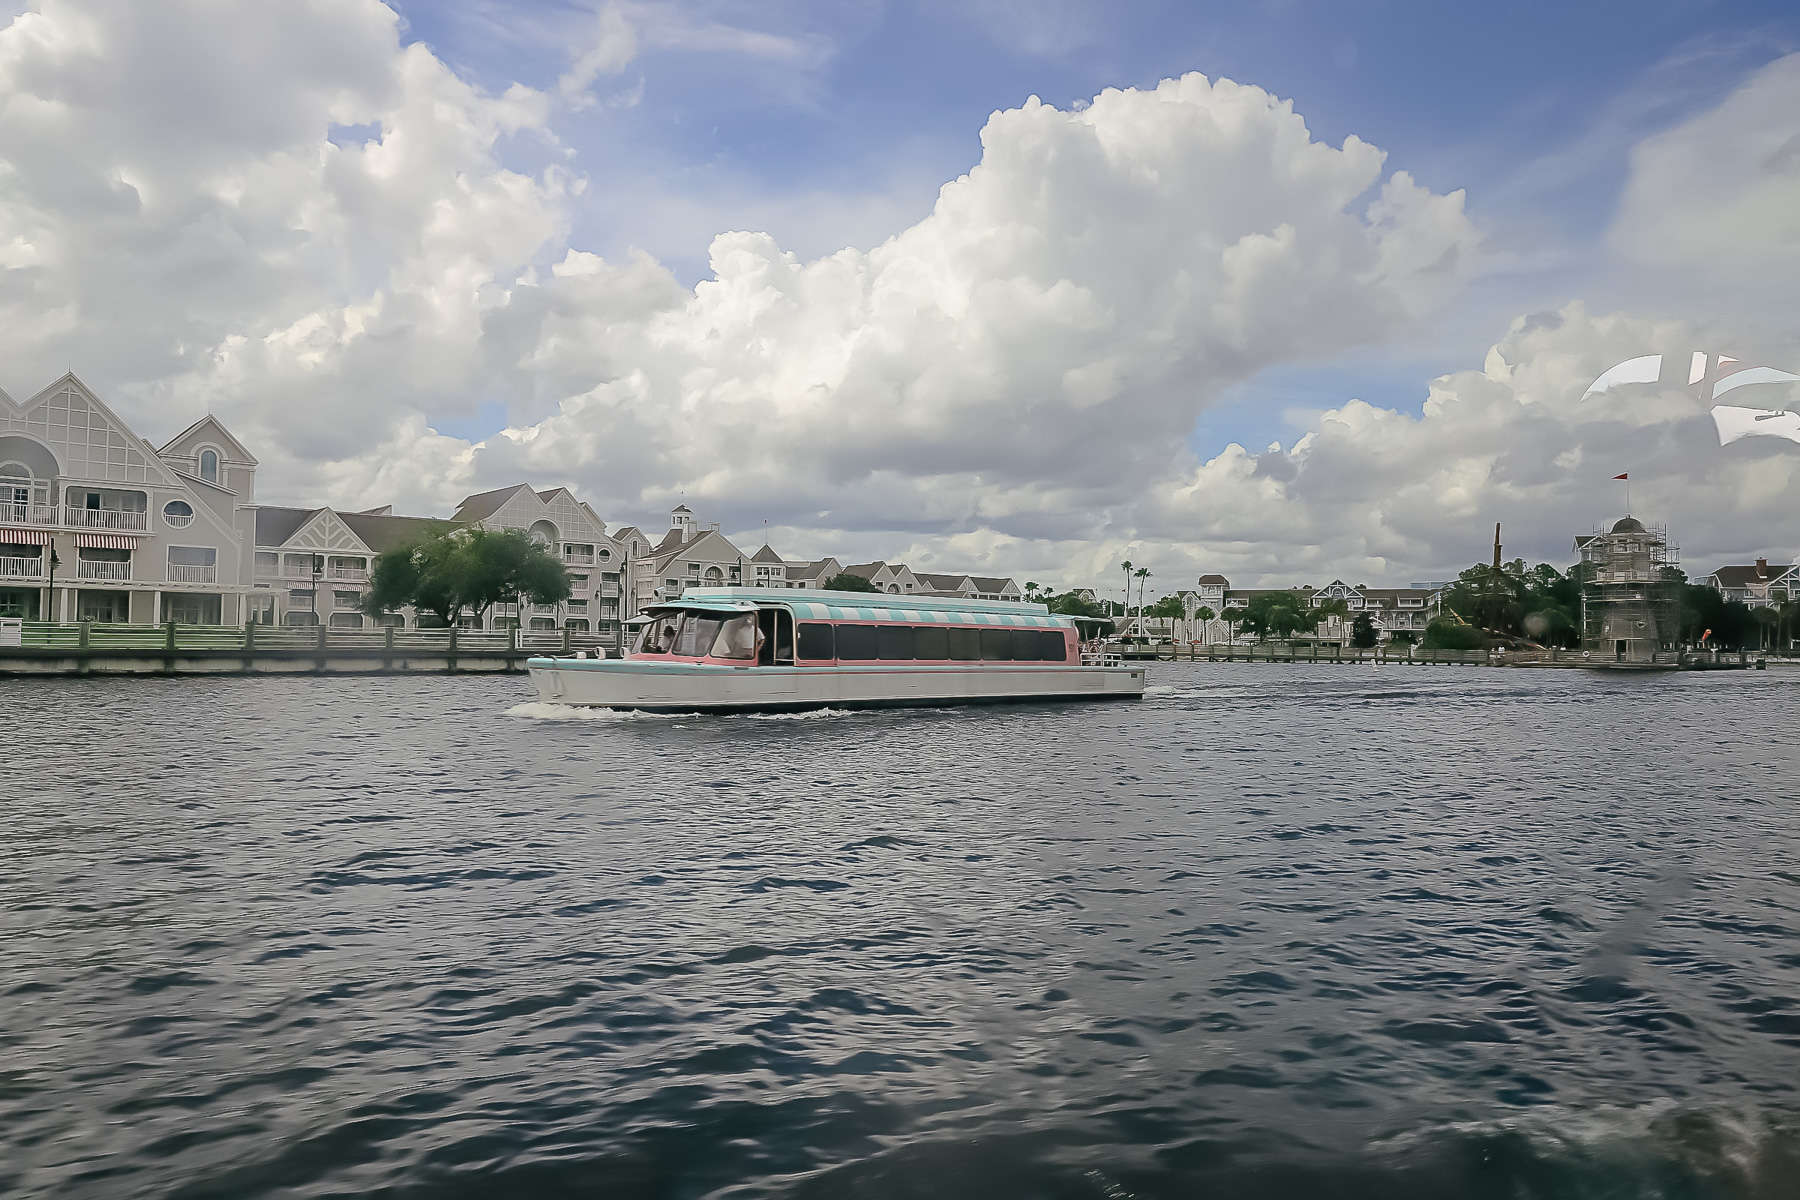 Friendship Boat passing Disney's Yacht Club 